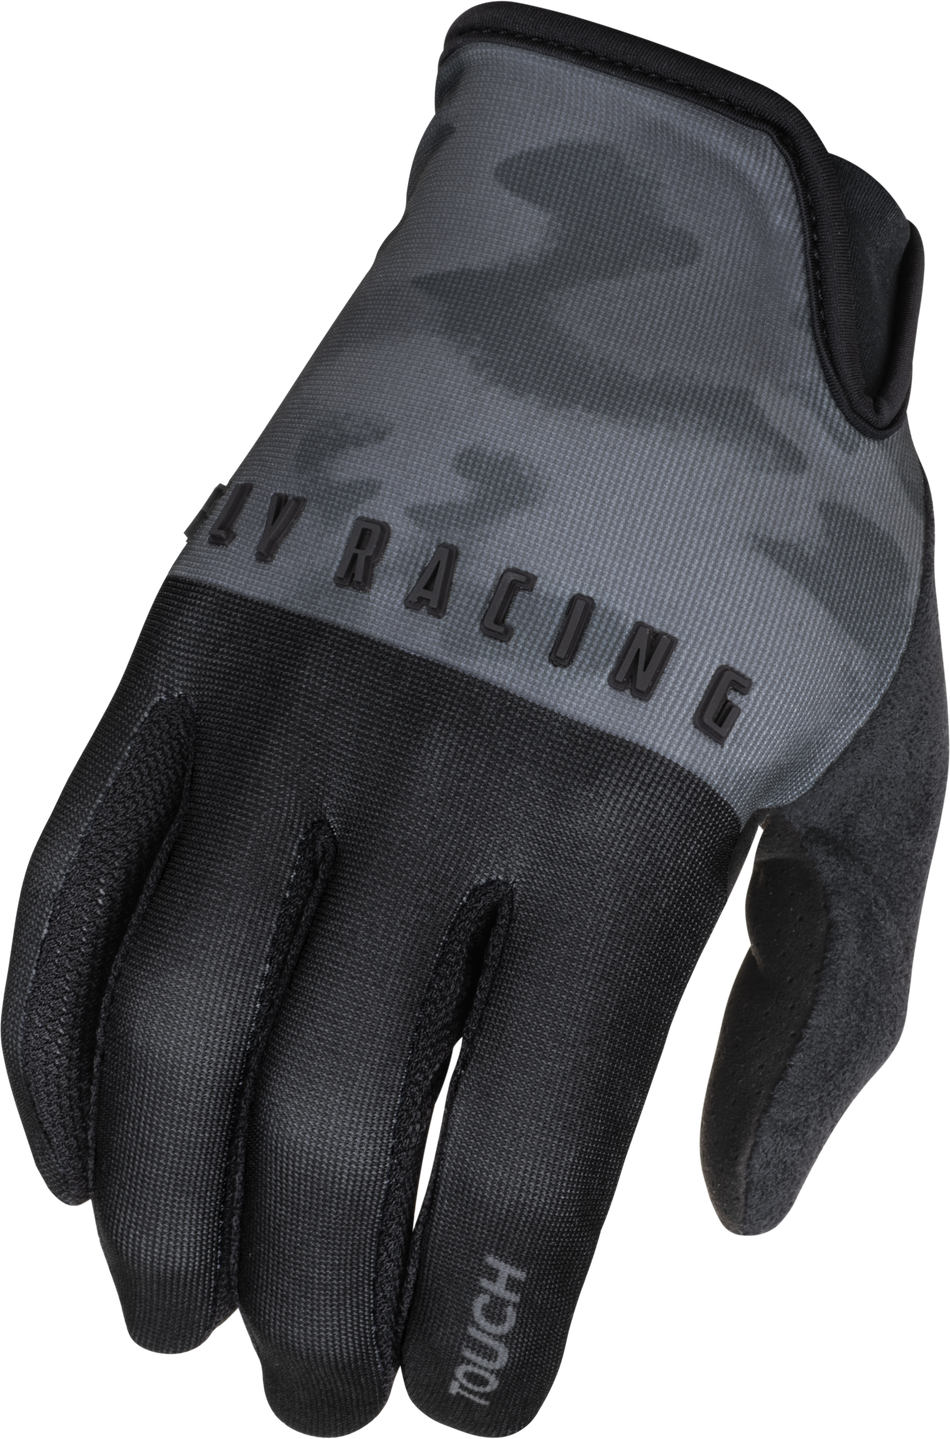 FLY RACING Media Gloves Black/Grey Camo 3x 350-01213X